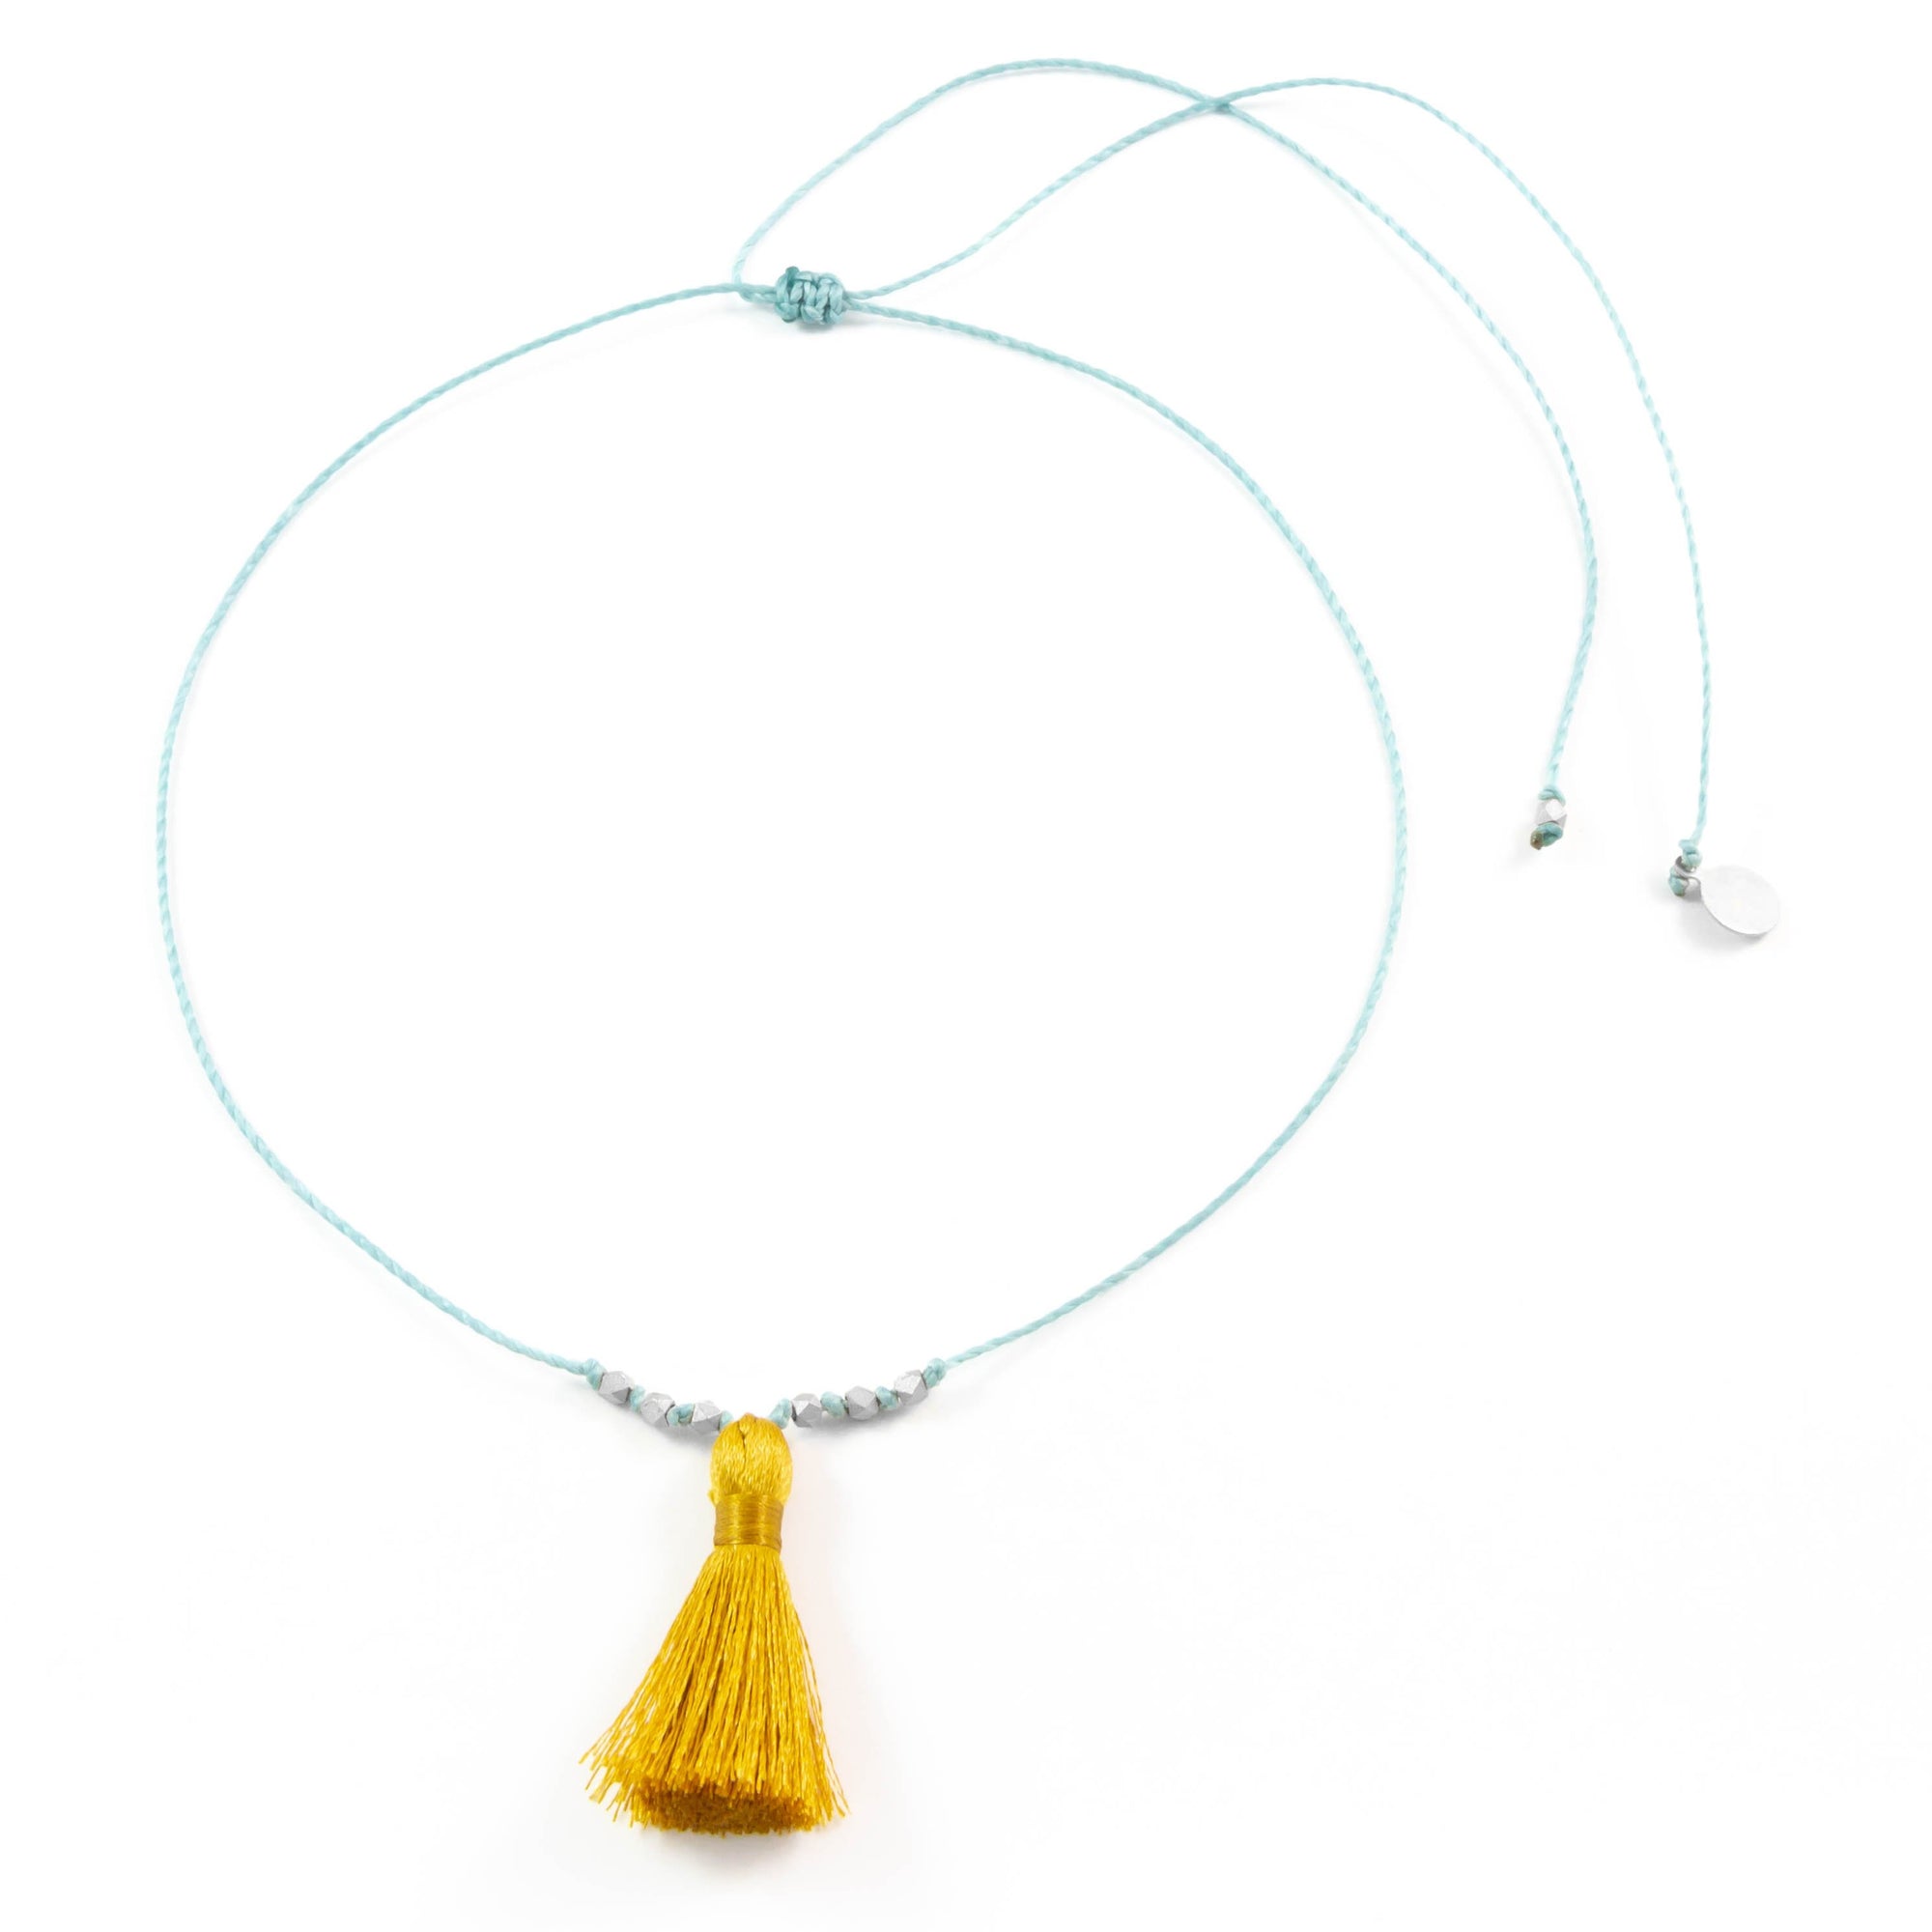 Stormy Ocean w/ Mustard Tassel On a String Necklace in Silver